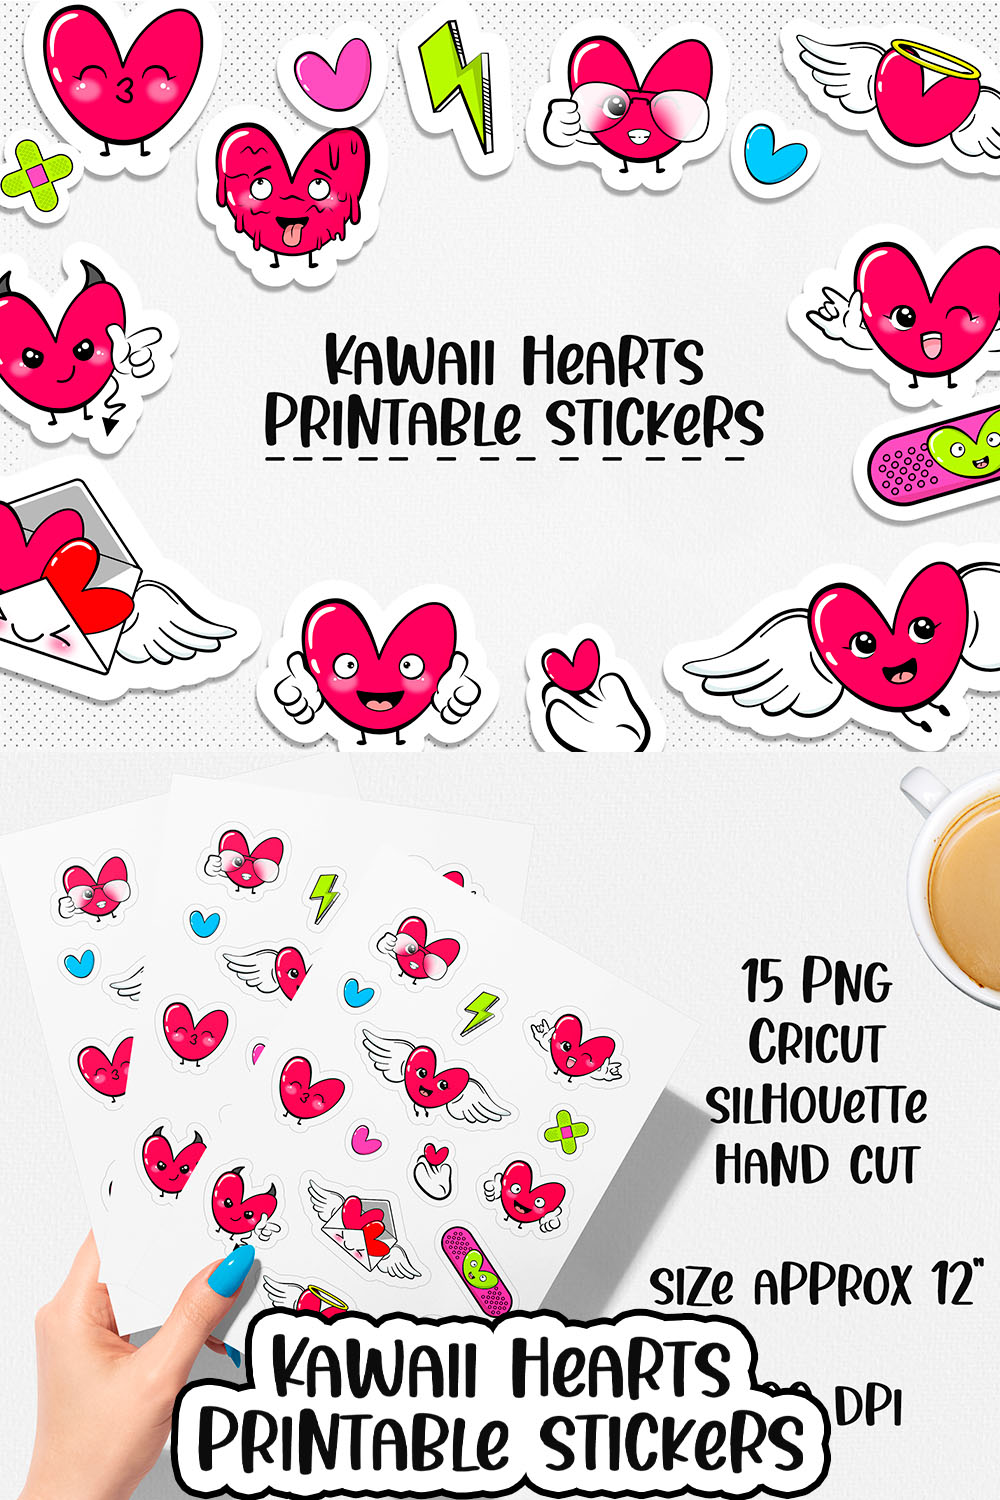 Cute Hearts Kawaii Printable Stickers pinterest image.